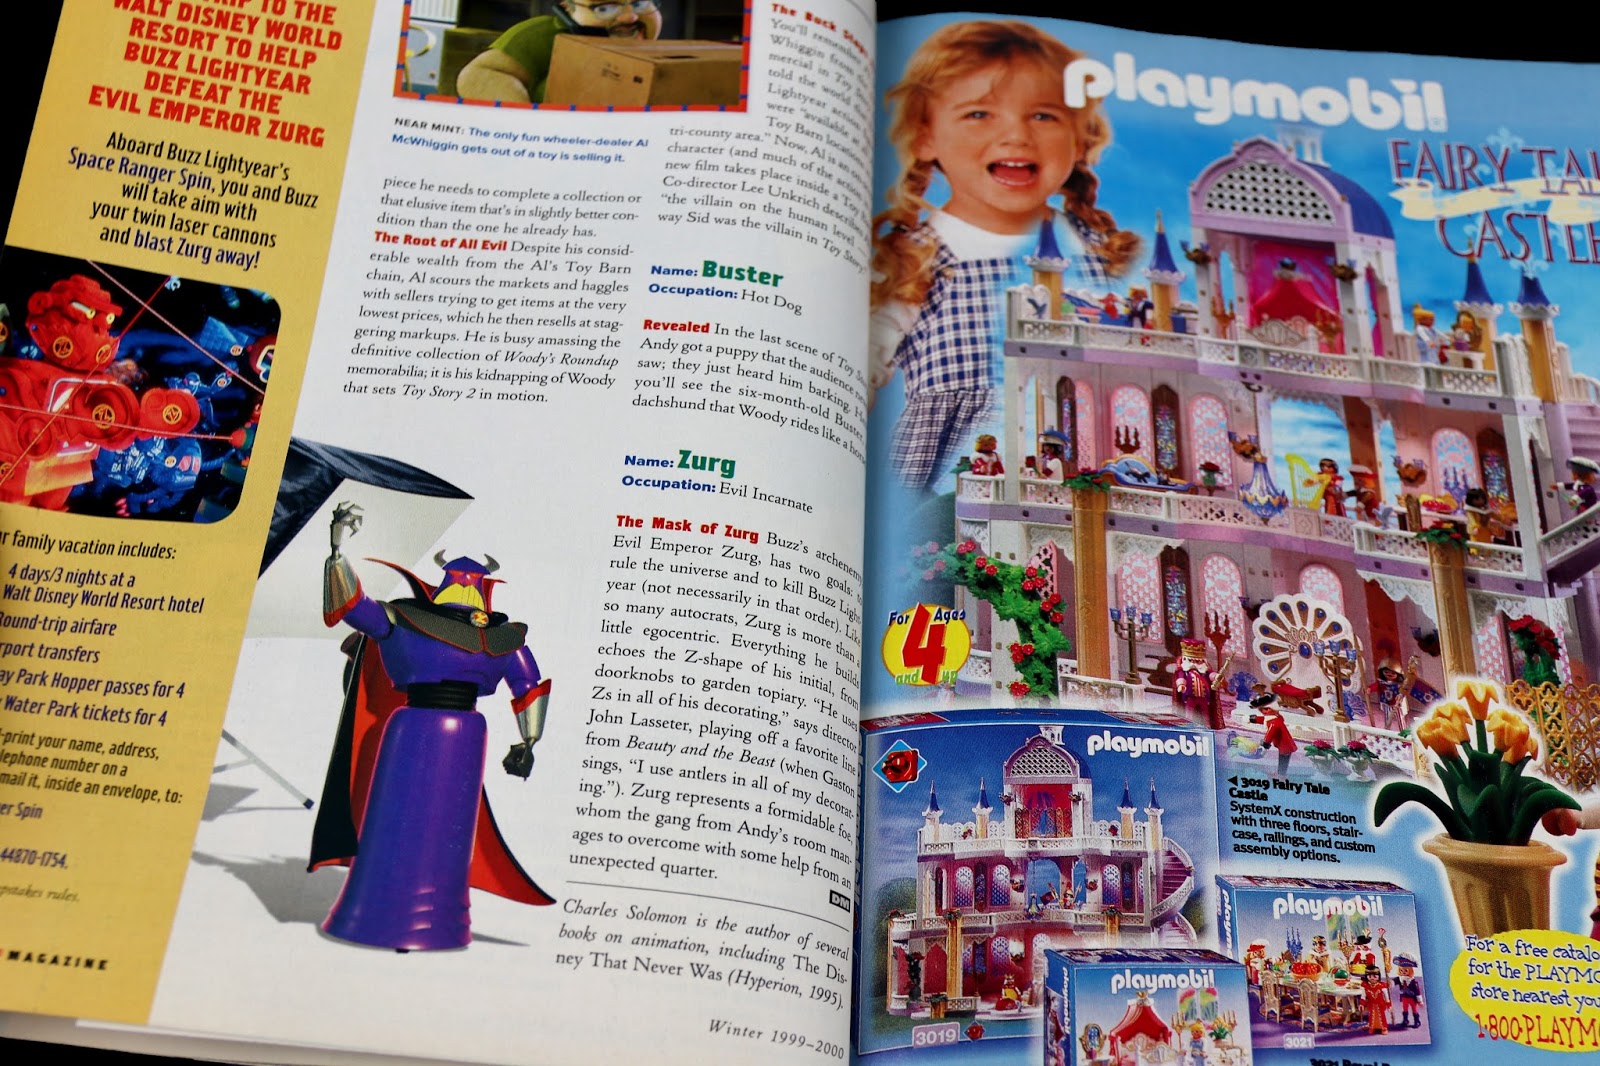 Disney Magazine (Winter 1999-2000 Edition) Toy Story 2